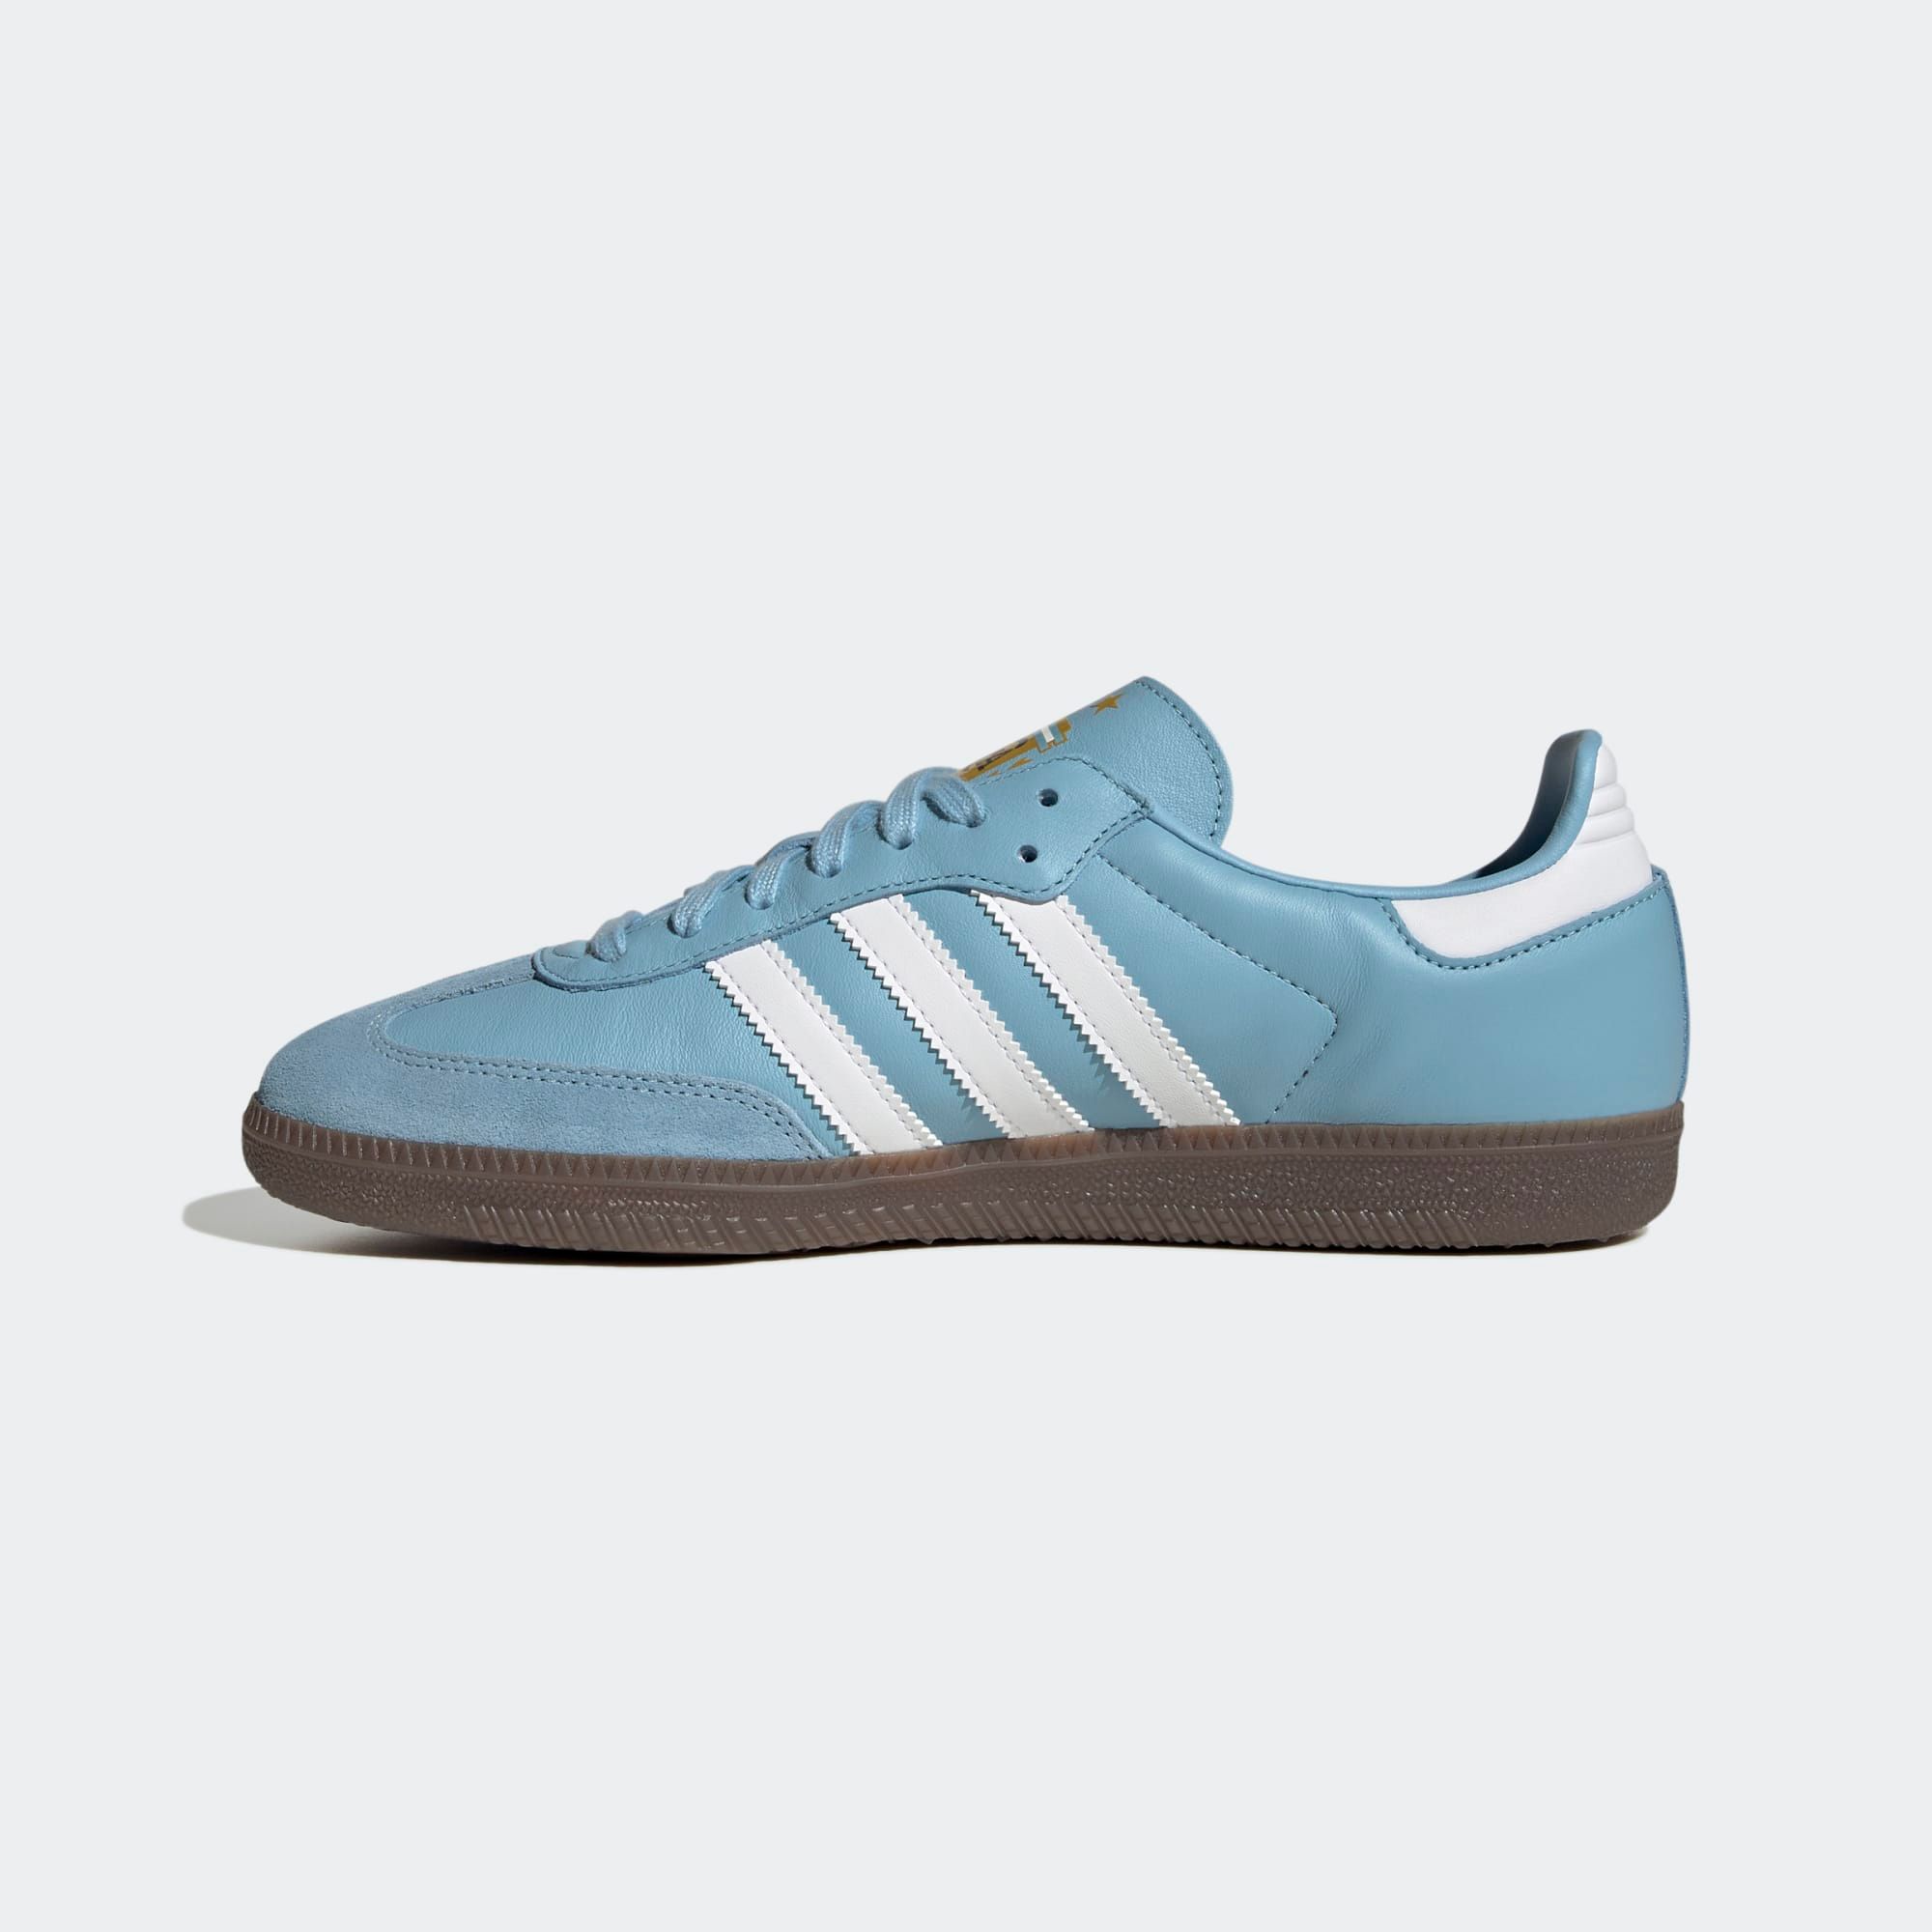 Argentine Football Association x adidas Samba – Online Sneaker Store